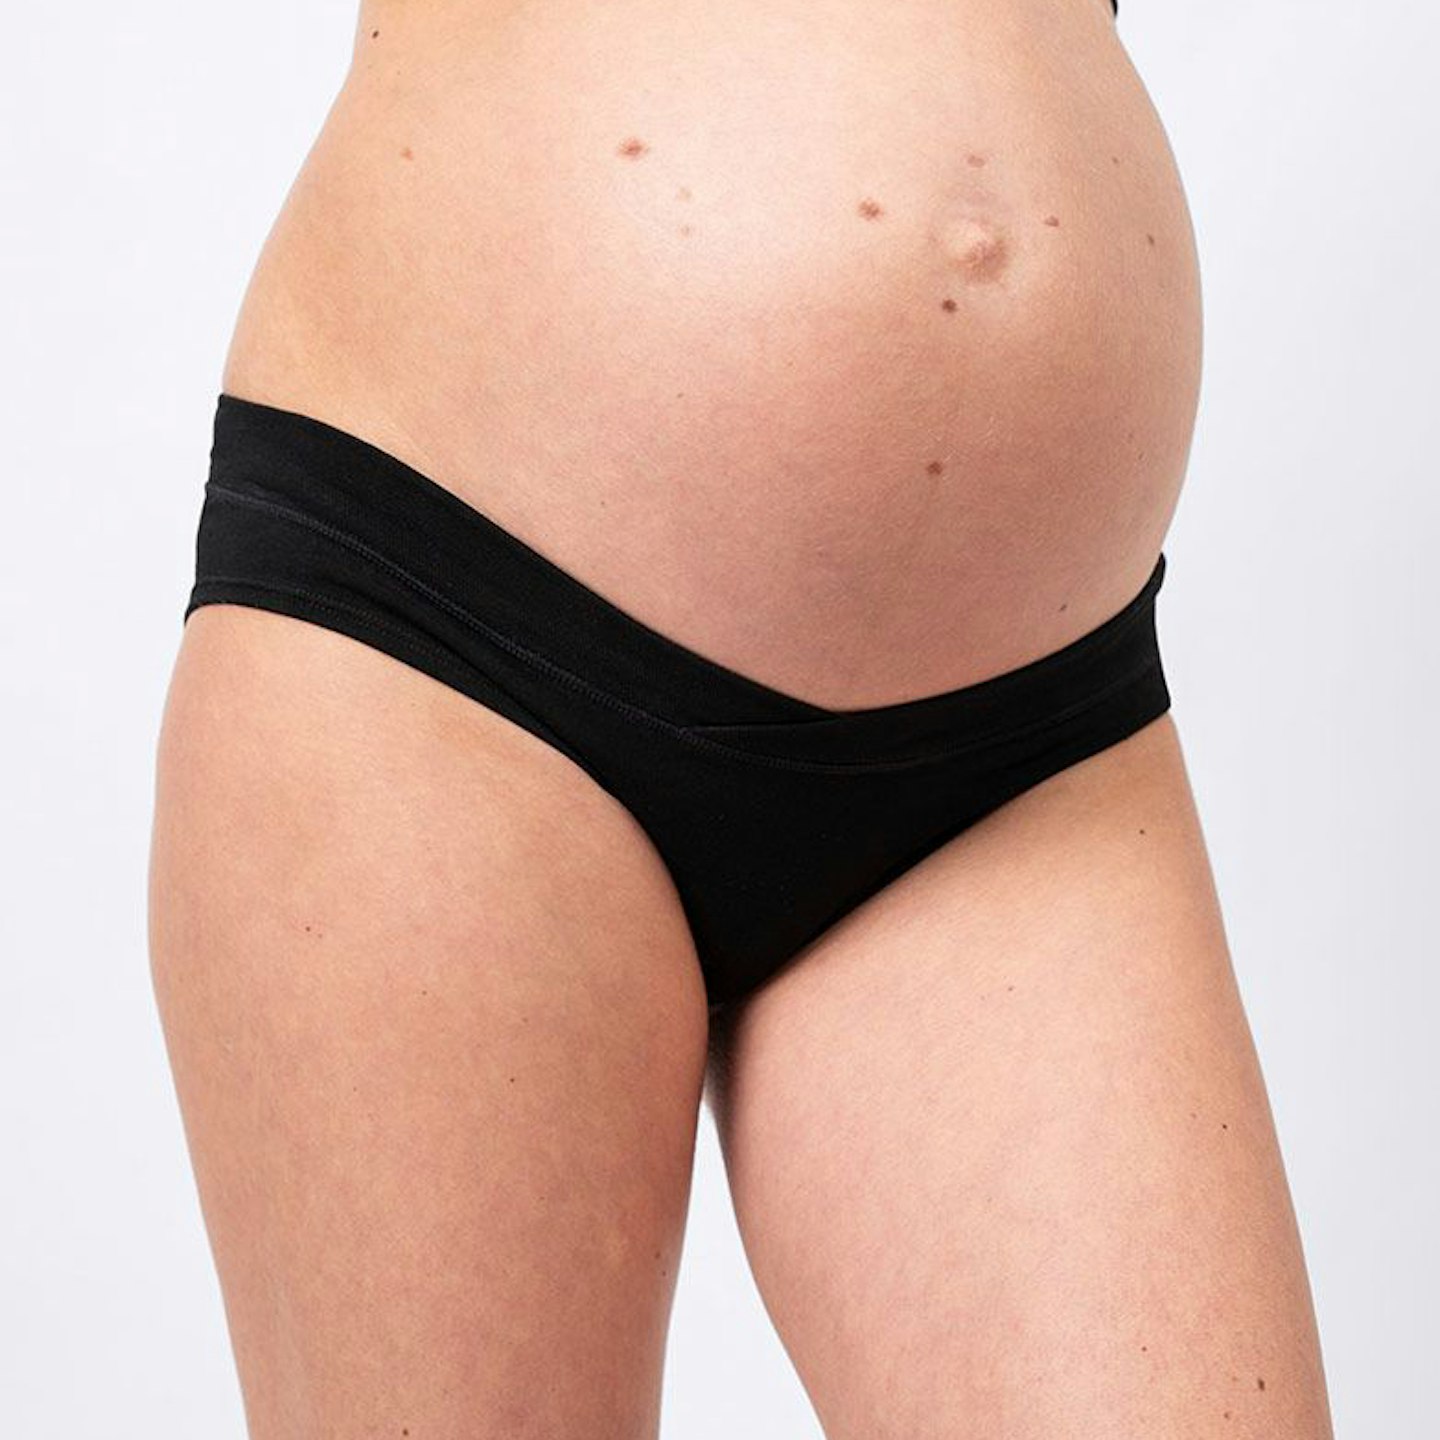 No VPL Over Bump Maternity Panties – Twin Pack